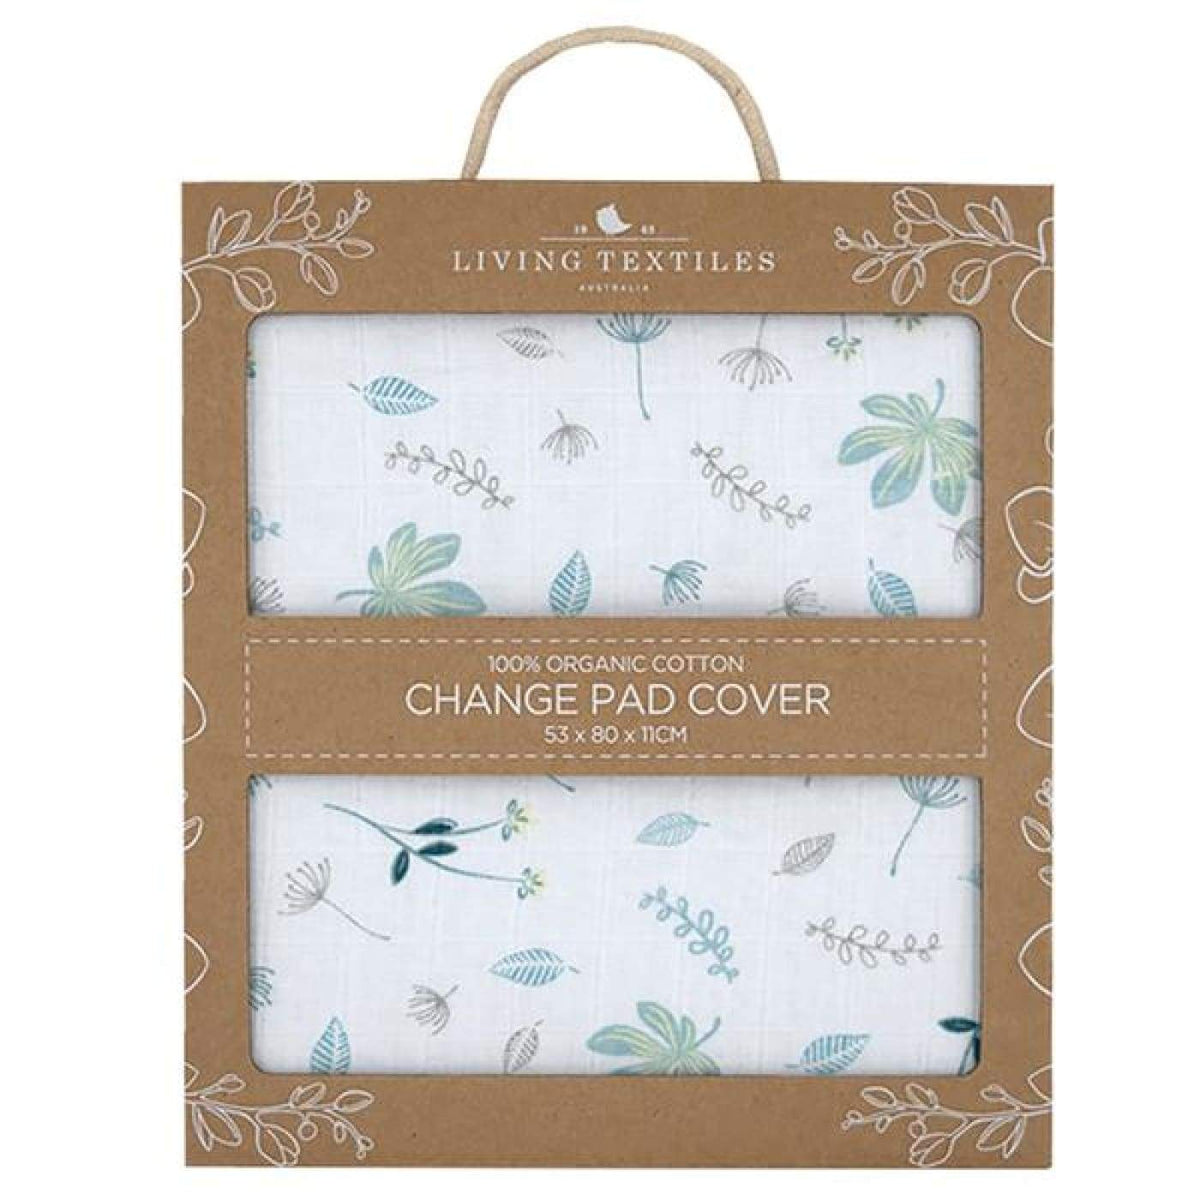 Living Textiles Muslin Change Pad Cover - Banana Leaf/Teal - Banana Leaf - BATHTIME &amp; CHANGING - CHANGE MATS/COVERS